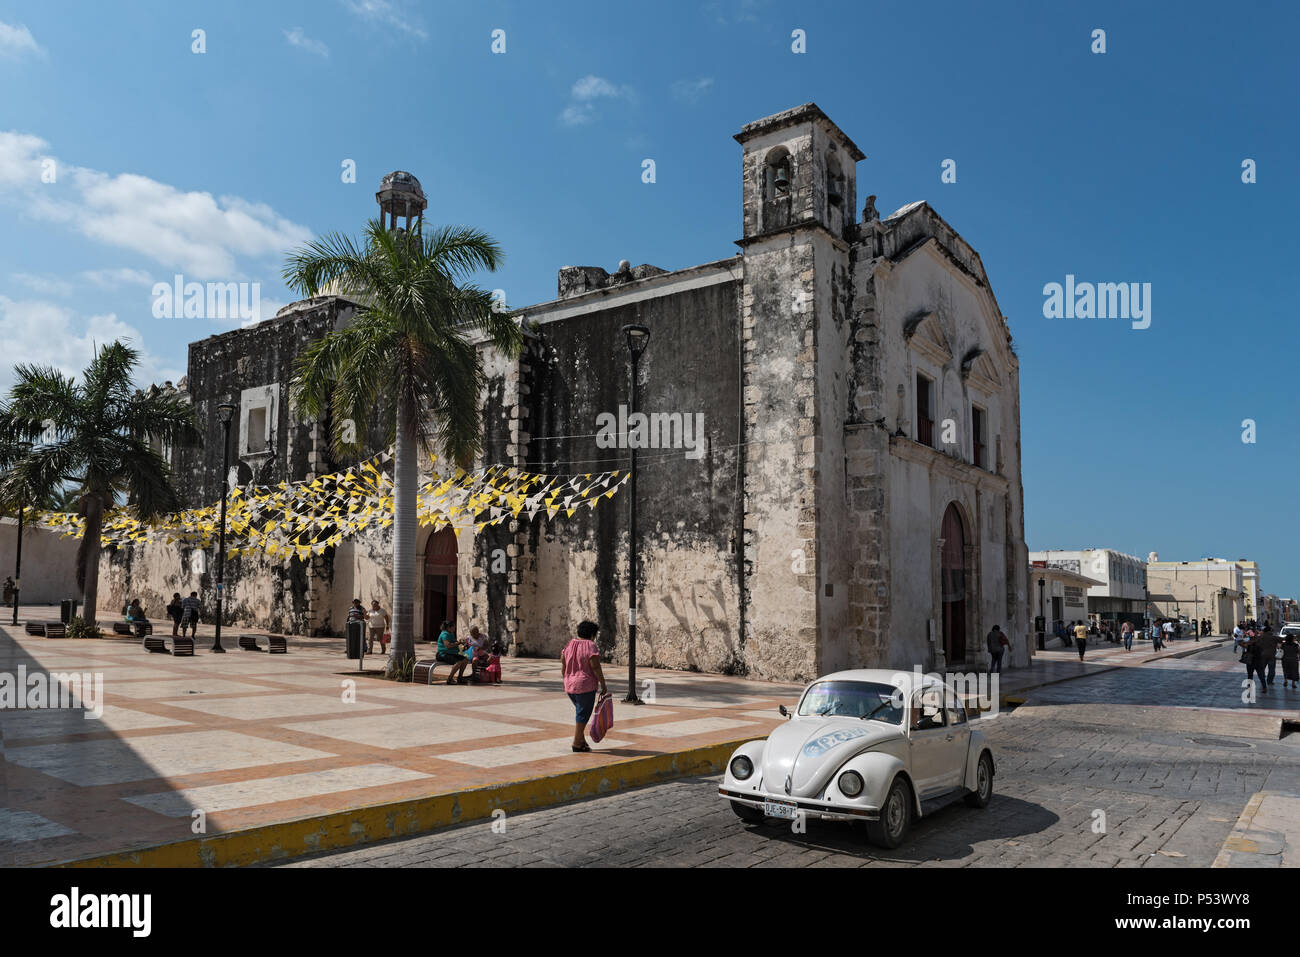 the church of san juan in the historic old town of san francisco de campeche, campeche, mexico Stock Photo